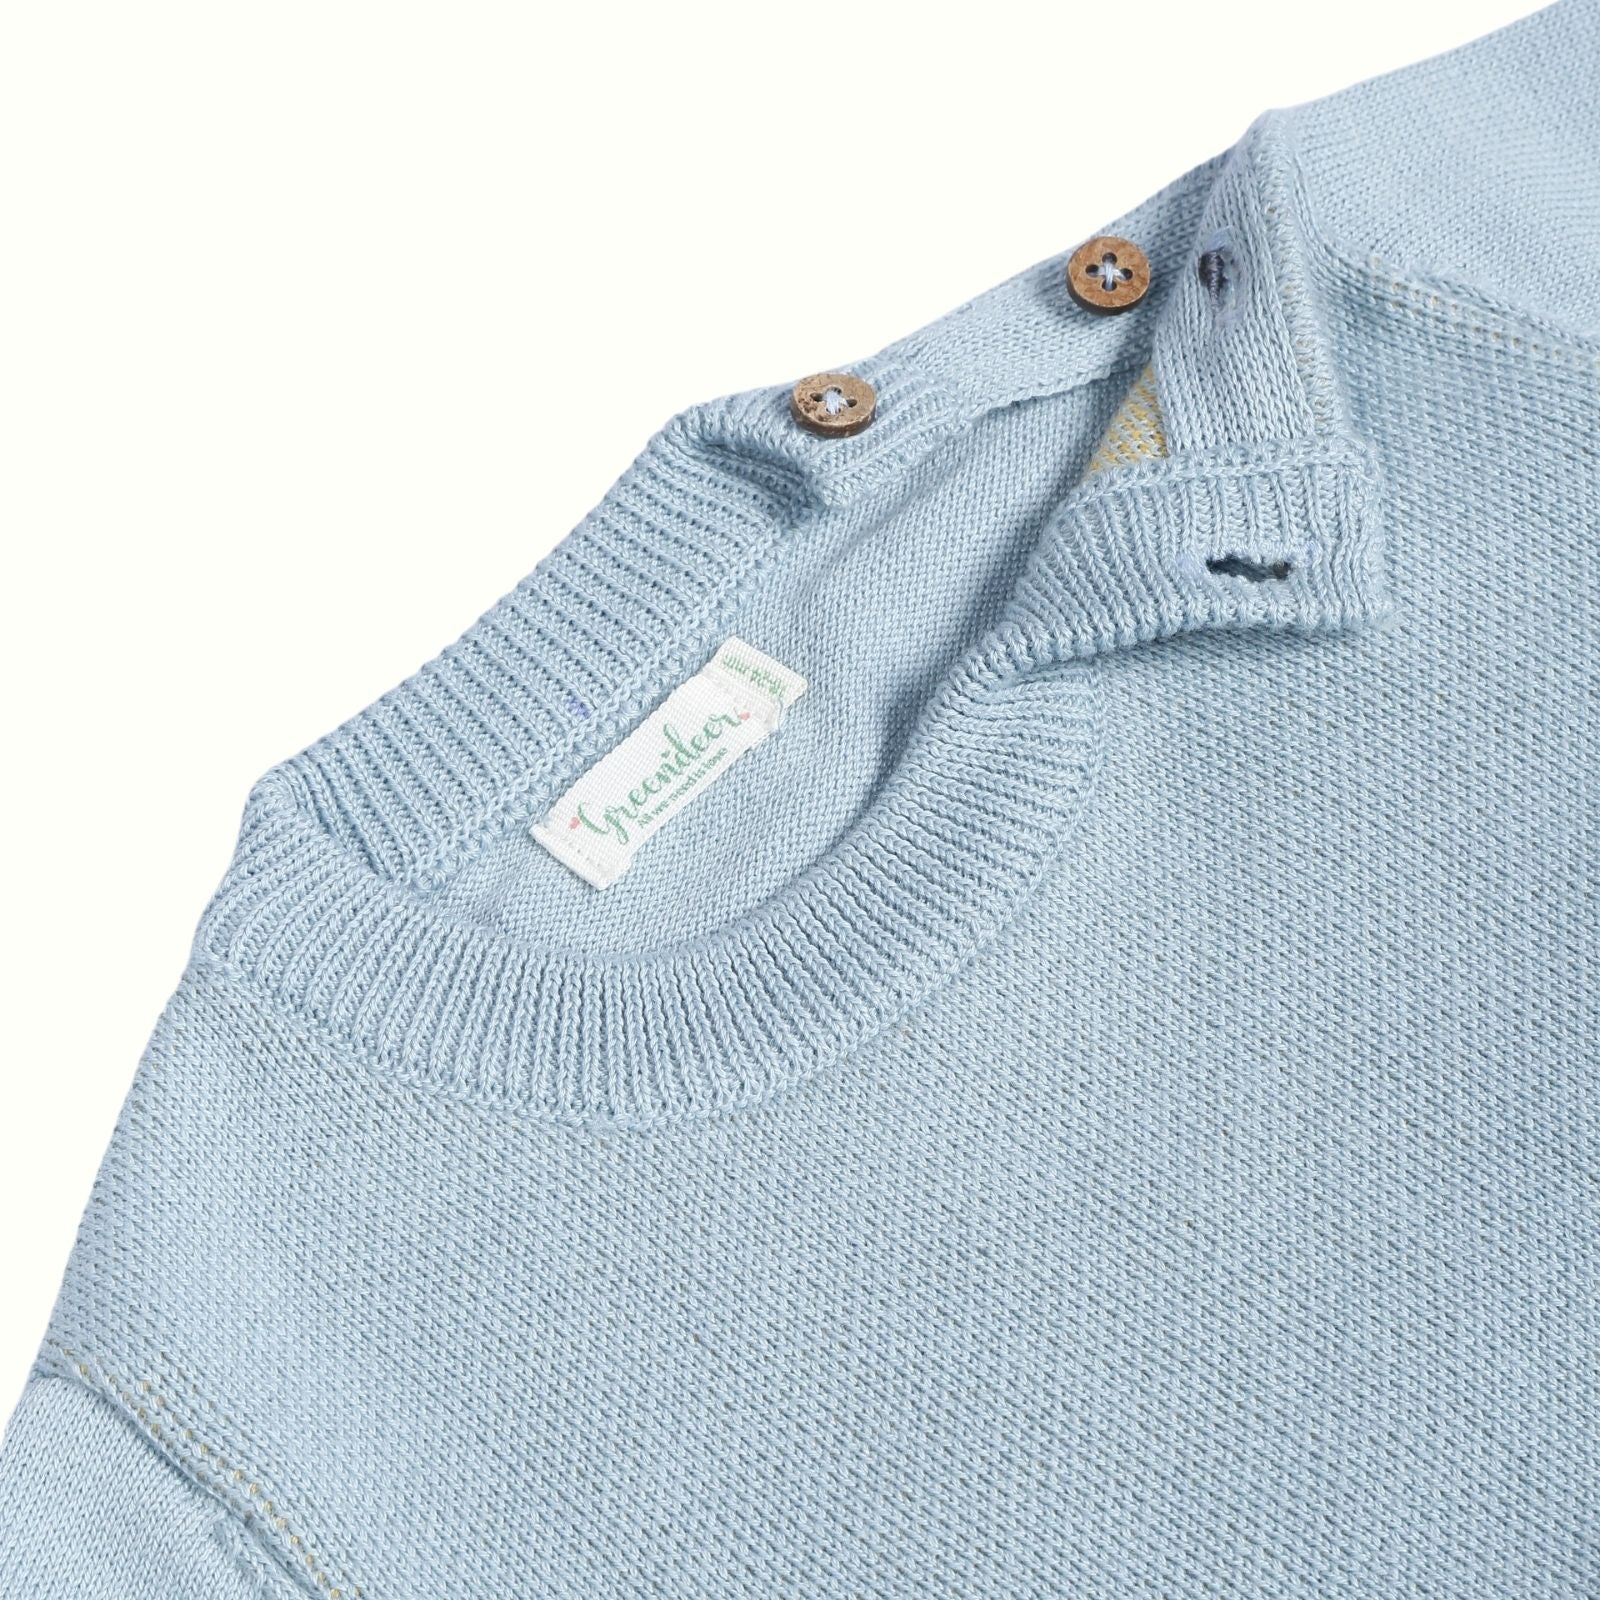 Greendeer Delighted Lion Jacquard 100% Cotton Sweater - Powder Blue & Orange